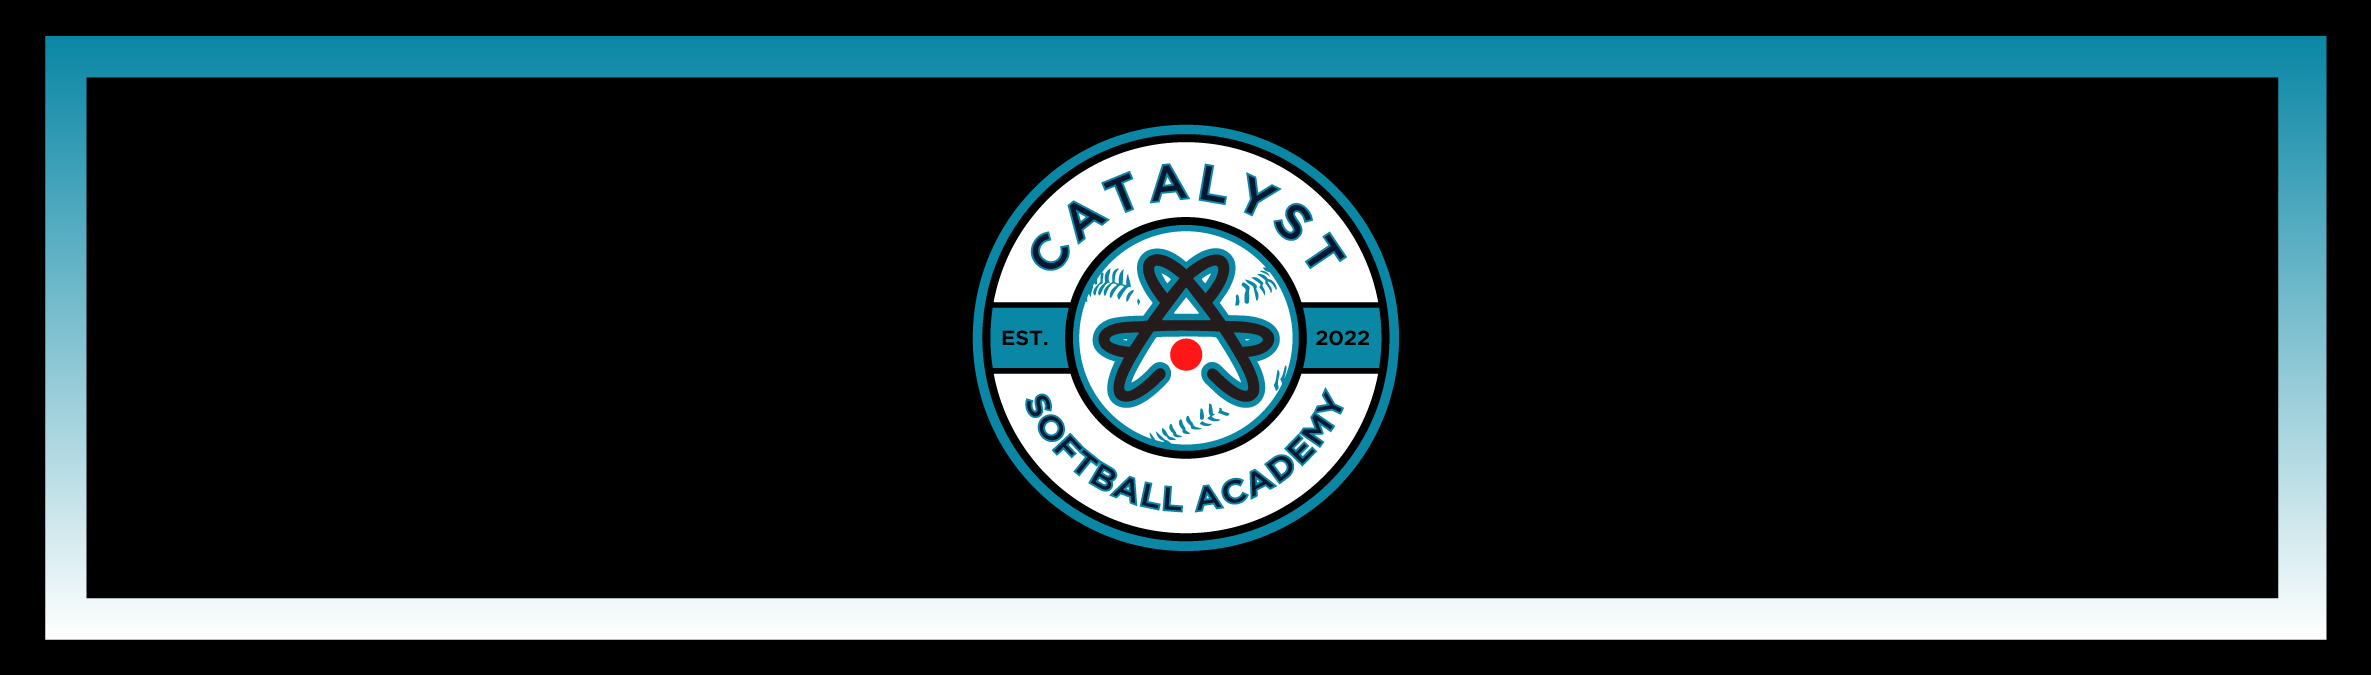 Catalyst Softball